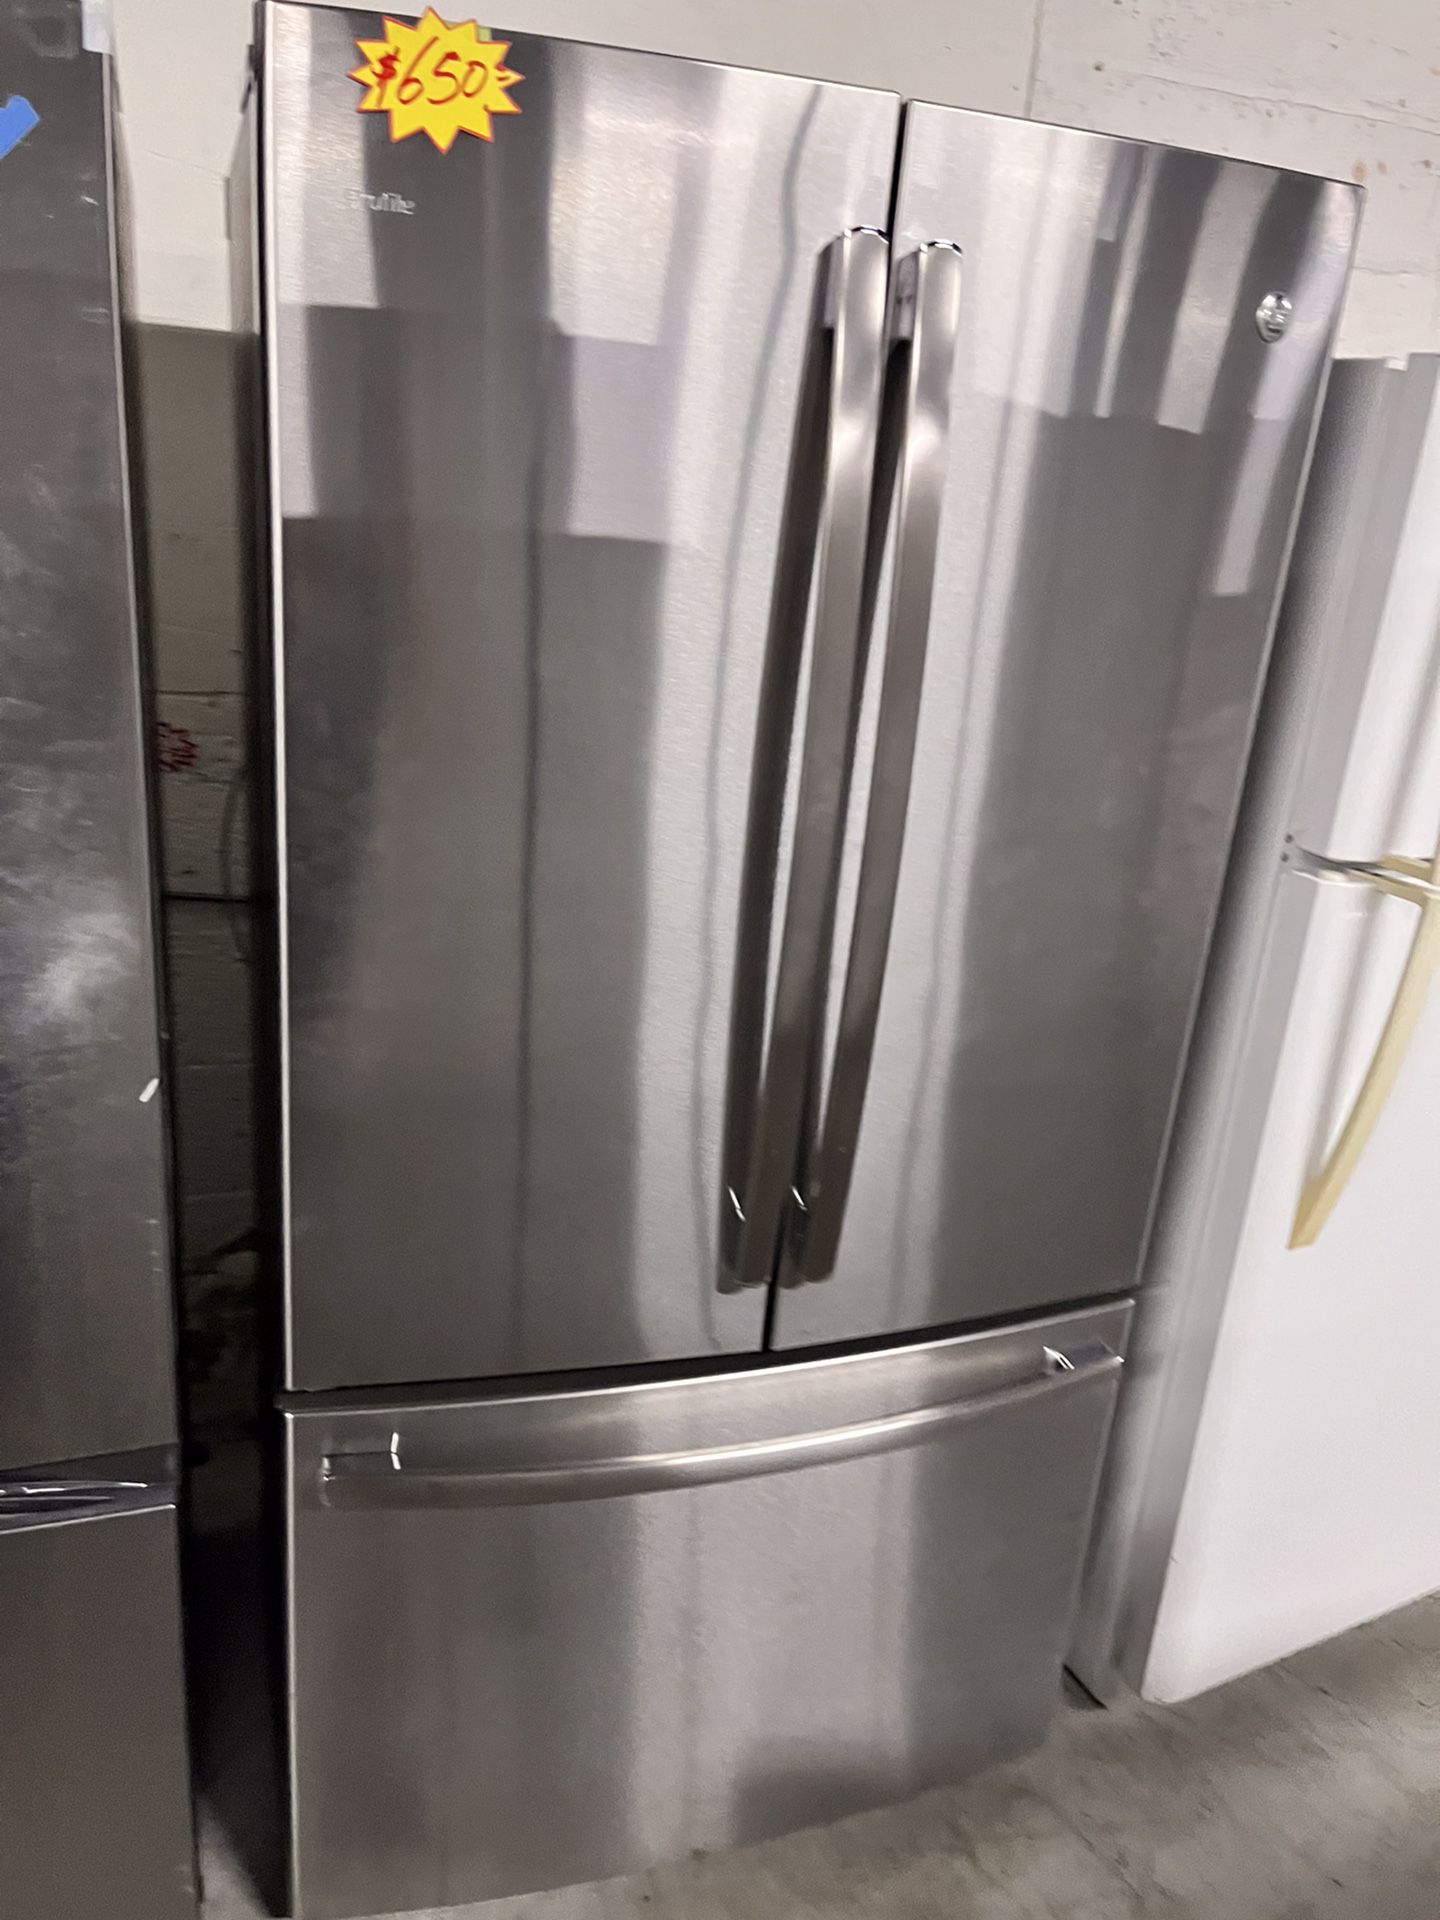 36” French Door Freezer Fridge in excellent condition with 4 Months Warranty 